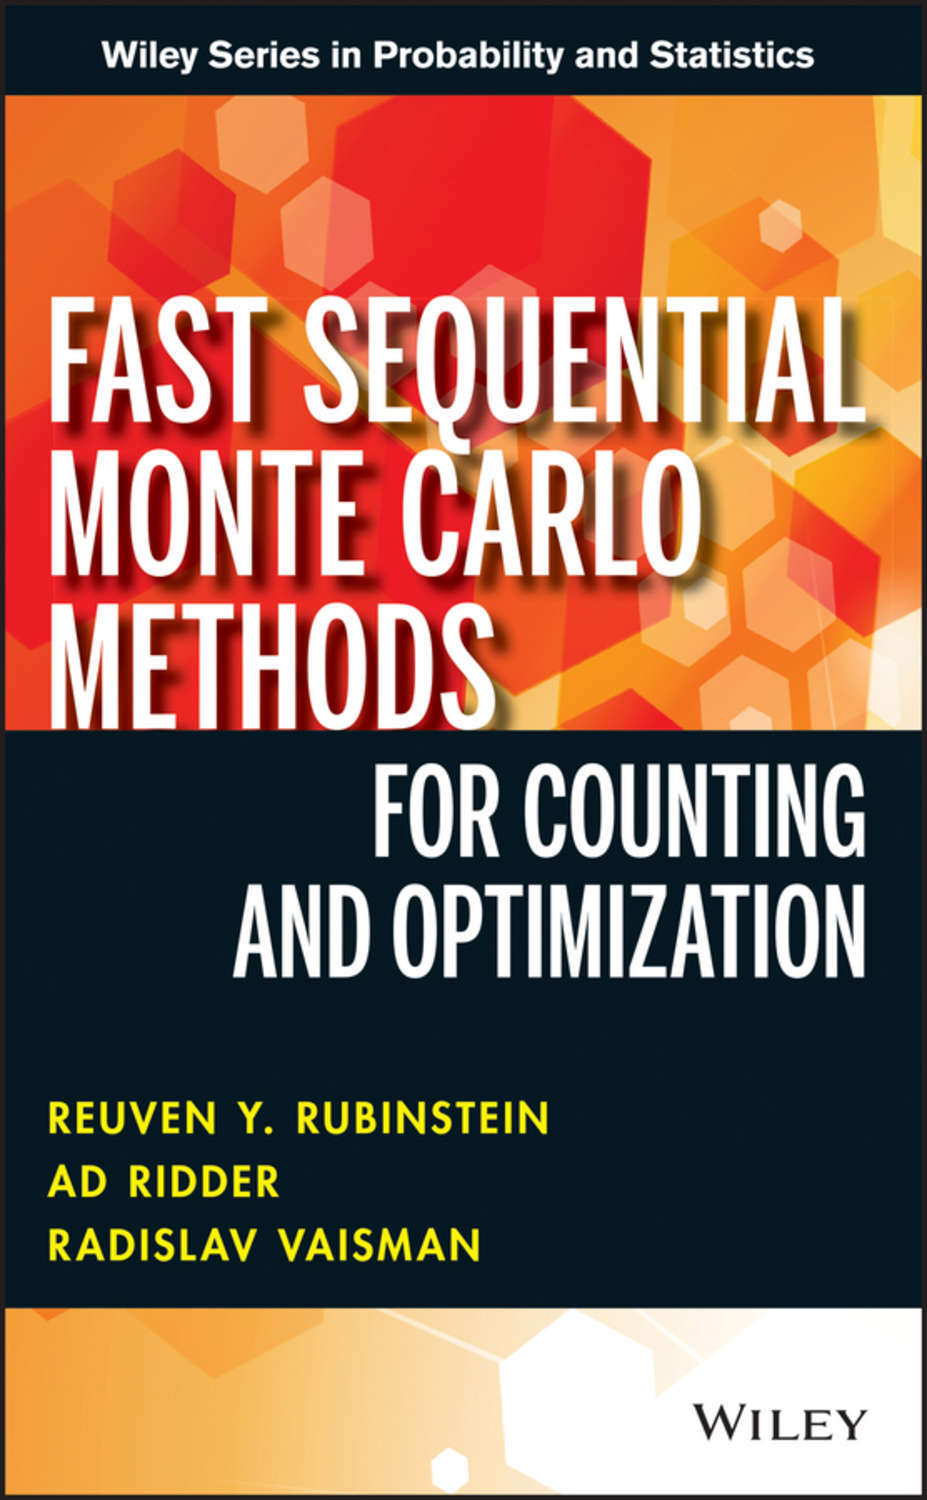 Фаст книги. Monte Carlo methods for forecasting. Книга фаст эдукейшен.